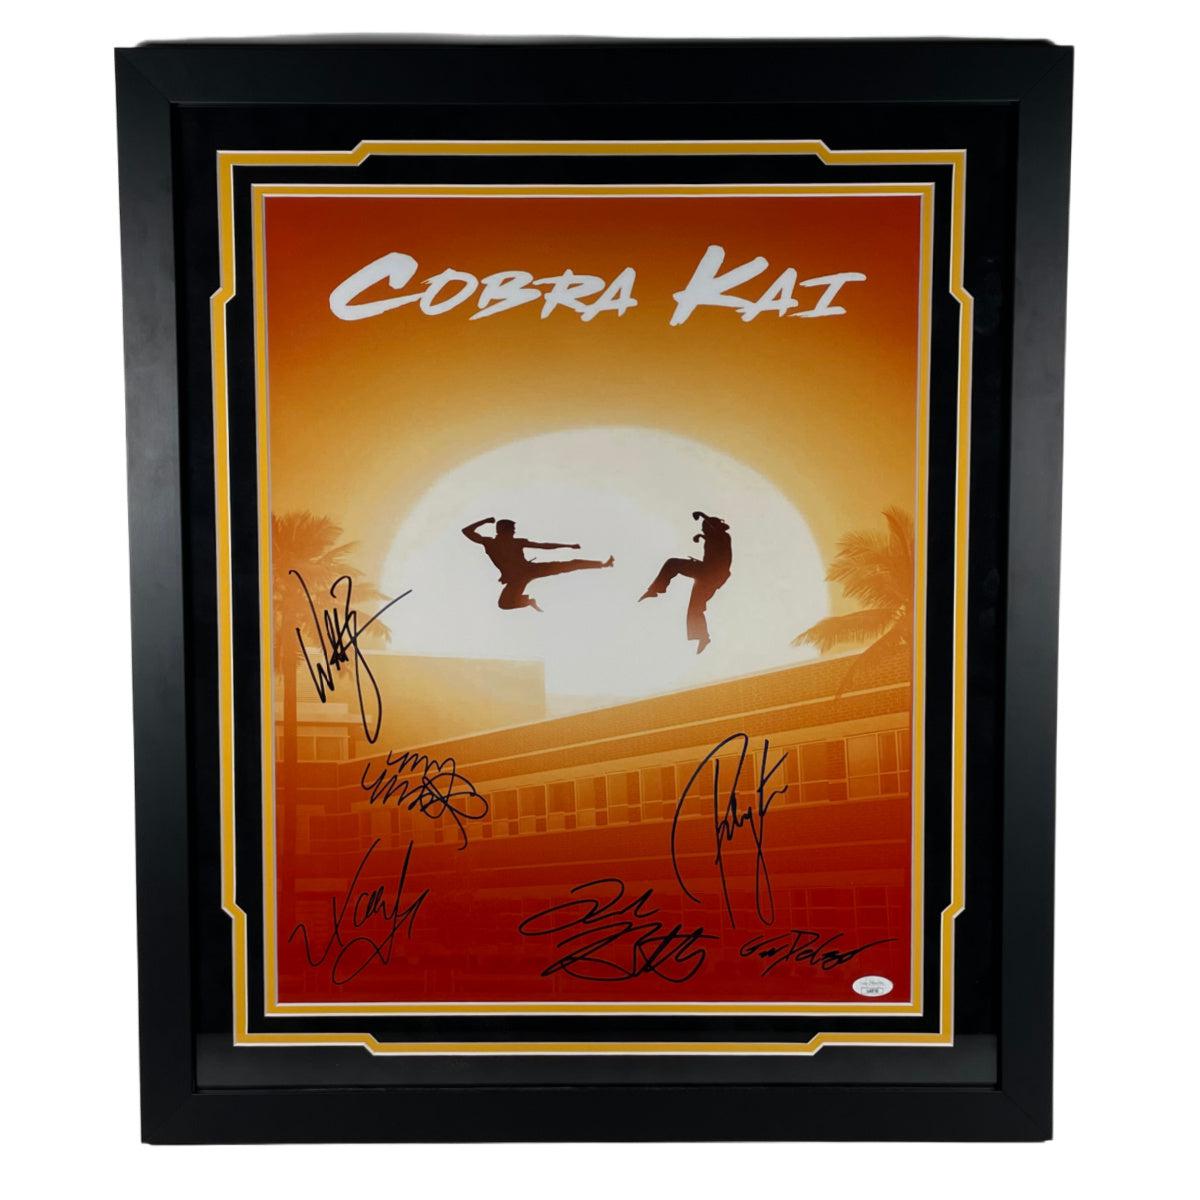 Cobra Kai Cast Signed 16x20 Photo Custom Framed William Zabka Autographed JSA